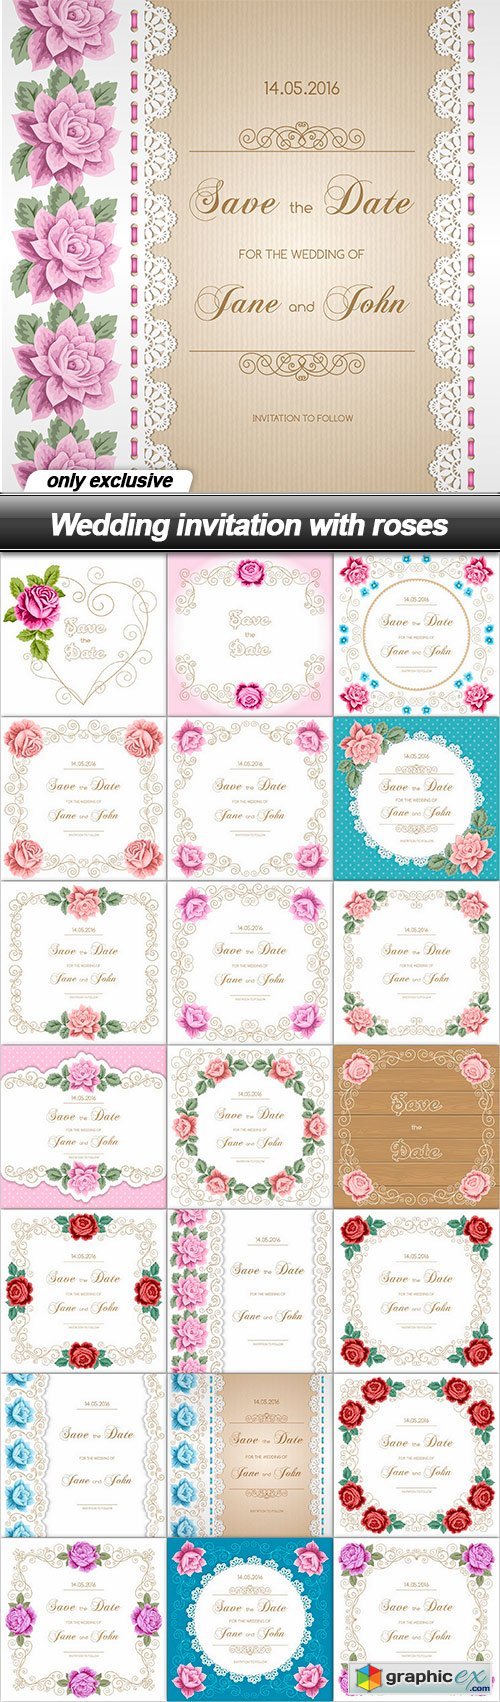 Wedding invitation with roses - 22 EPS